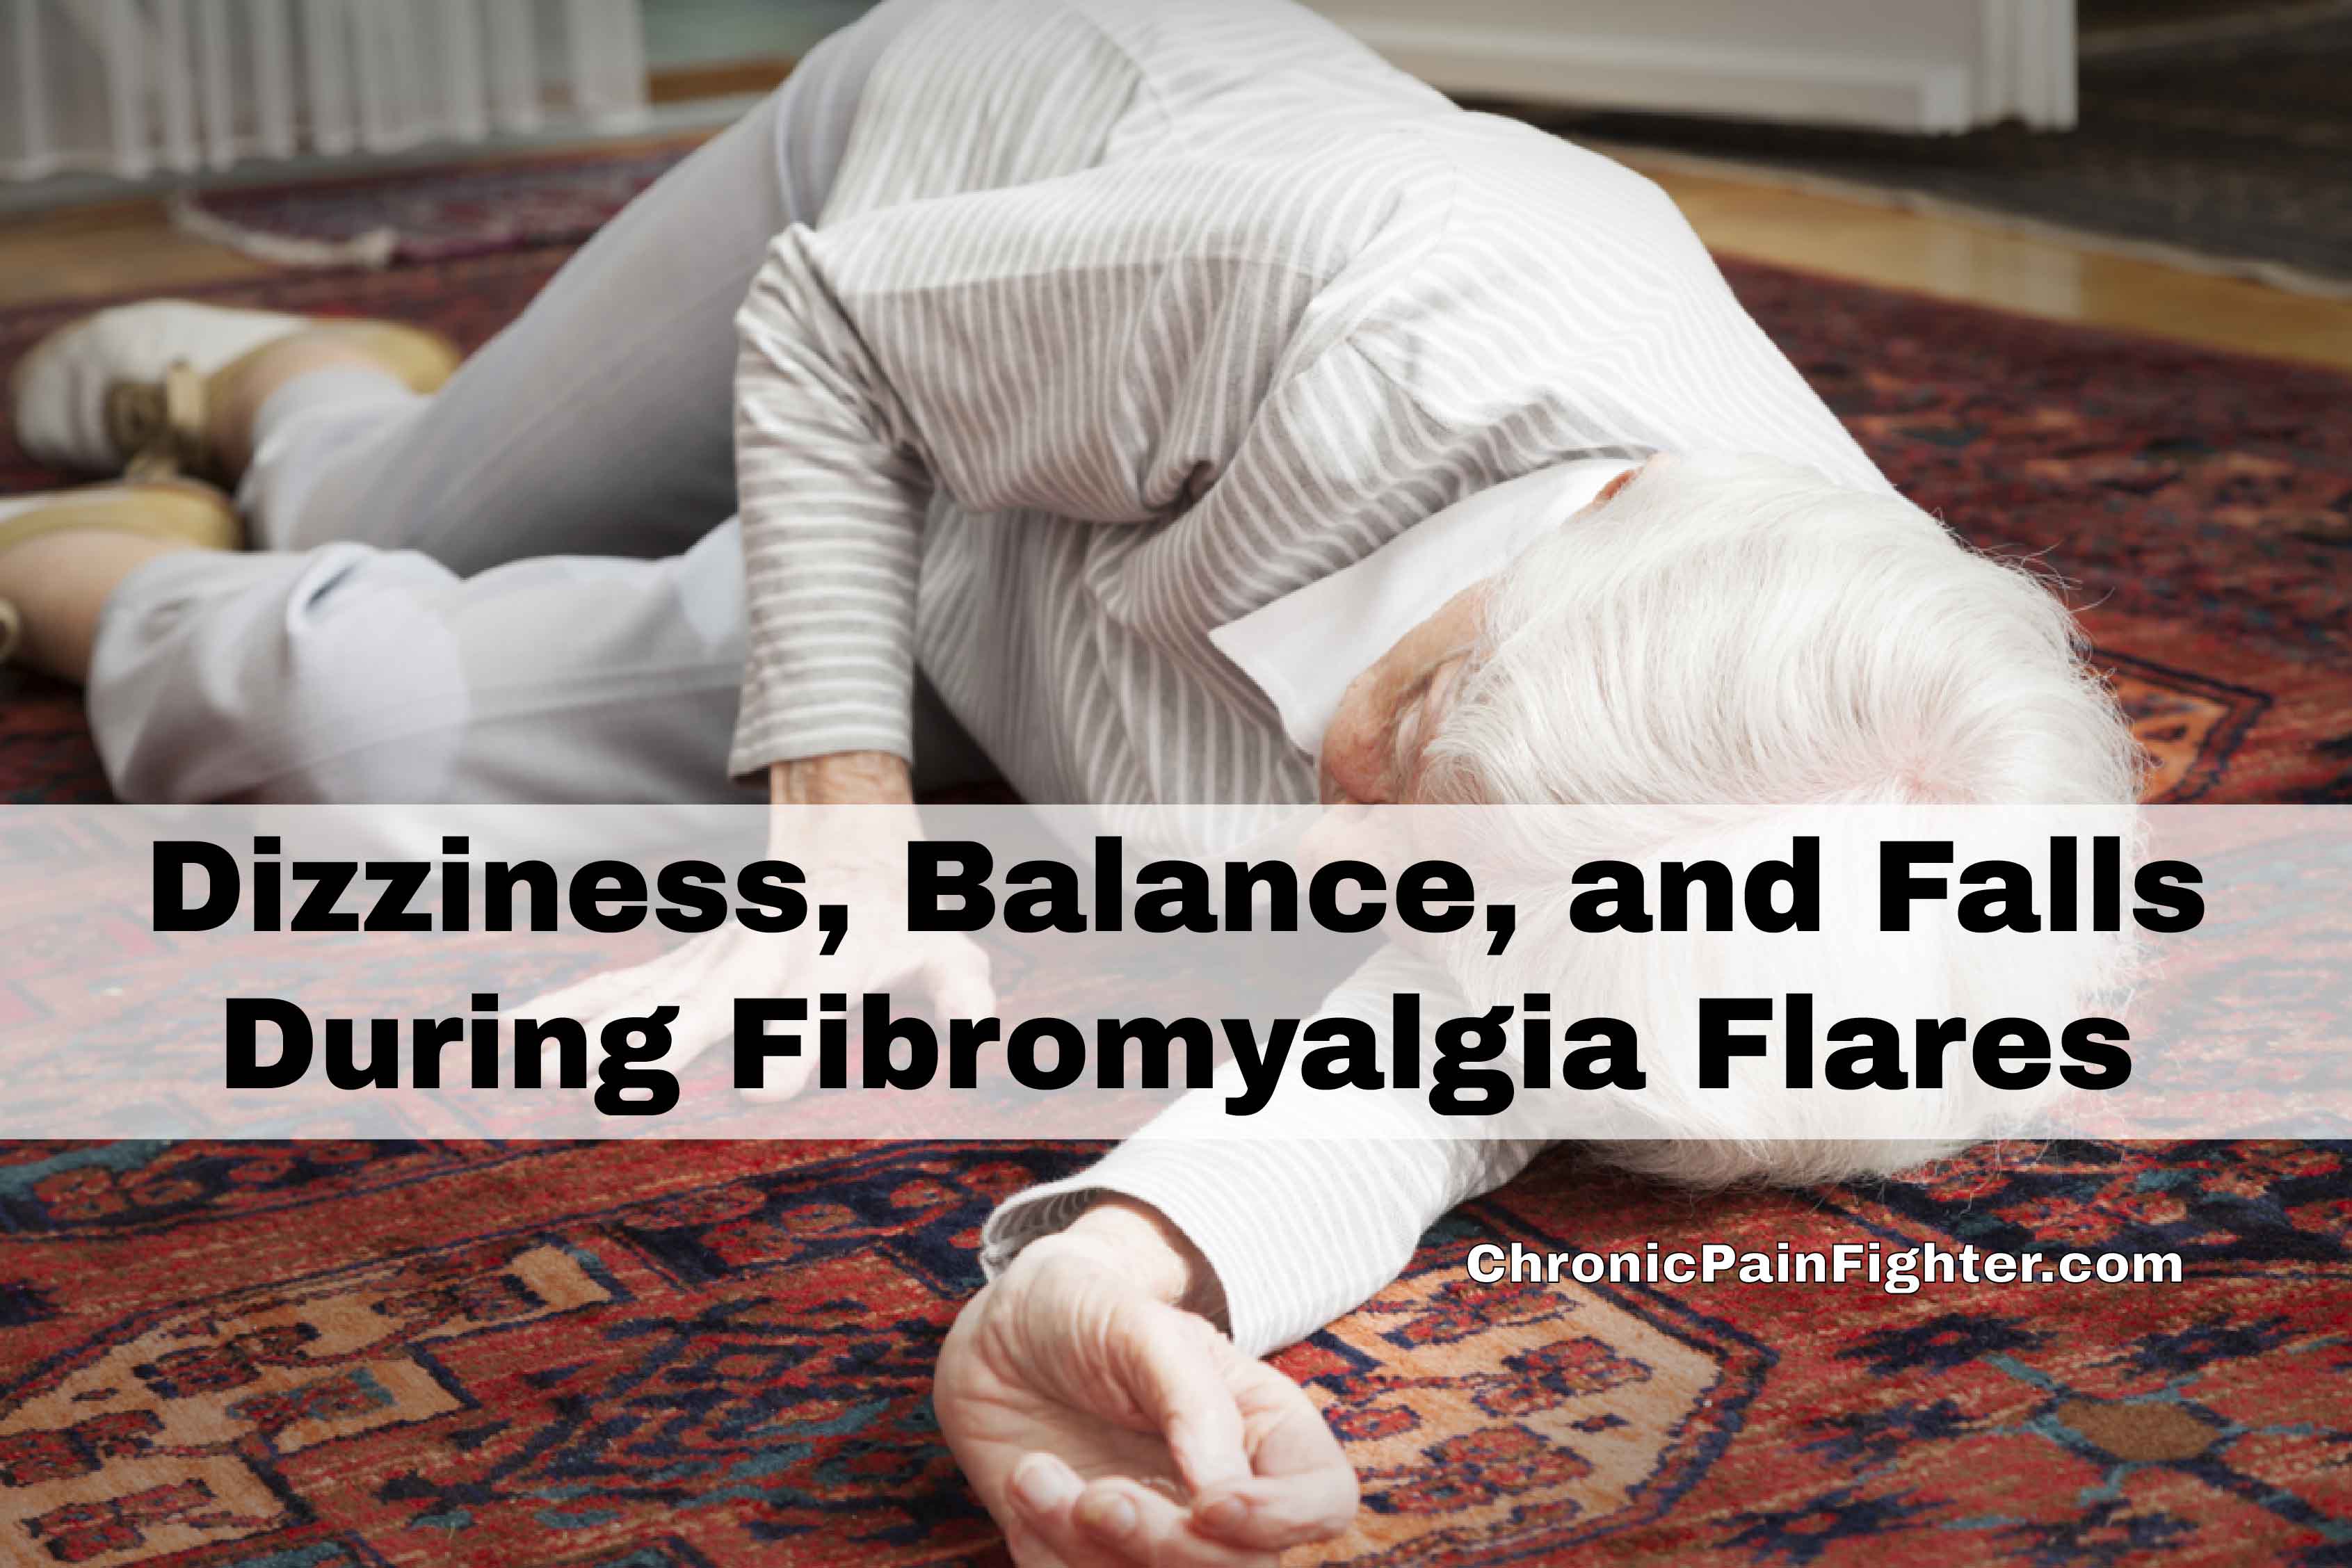 Dizziness, Balance, and Falls During Fibromyalgia Flares